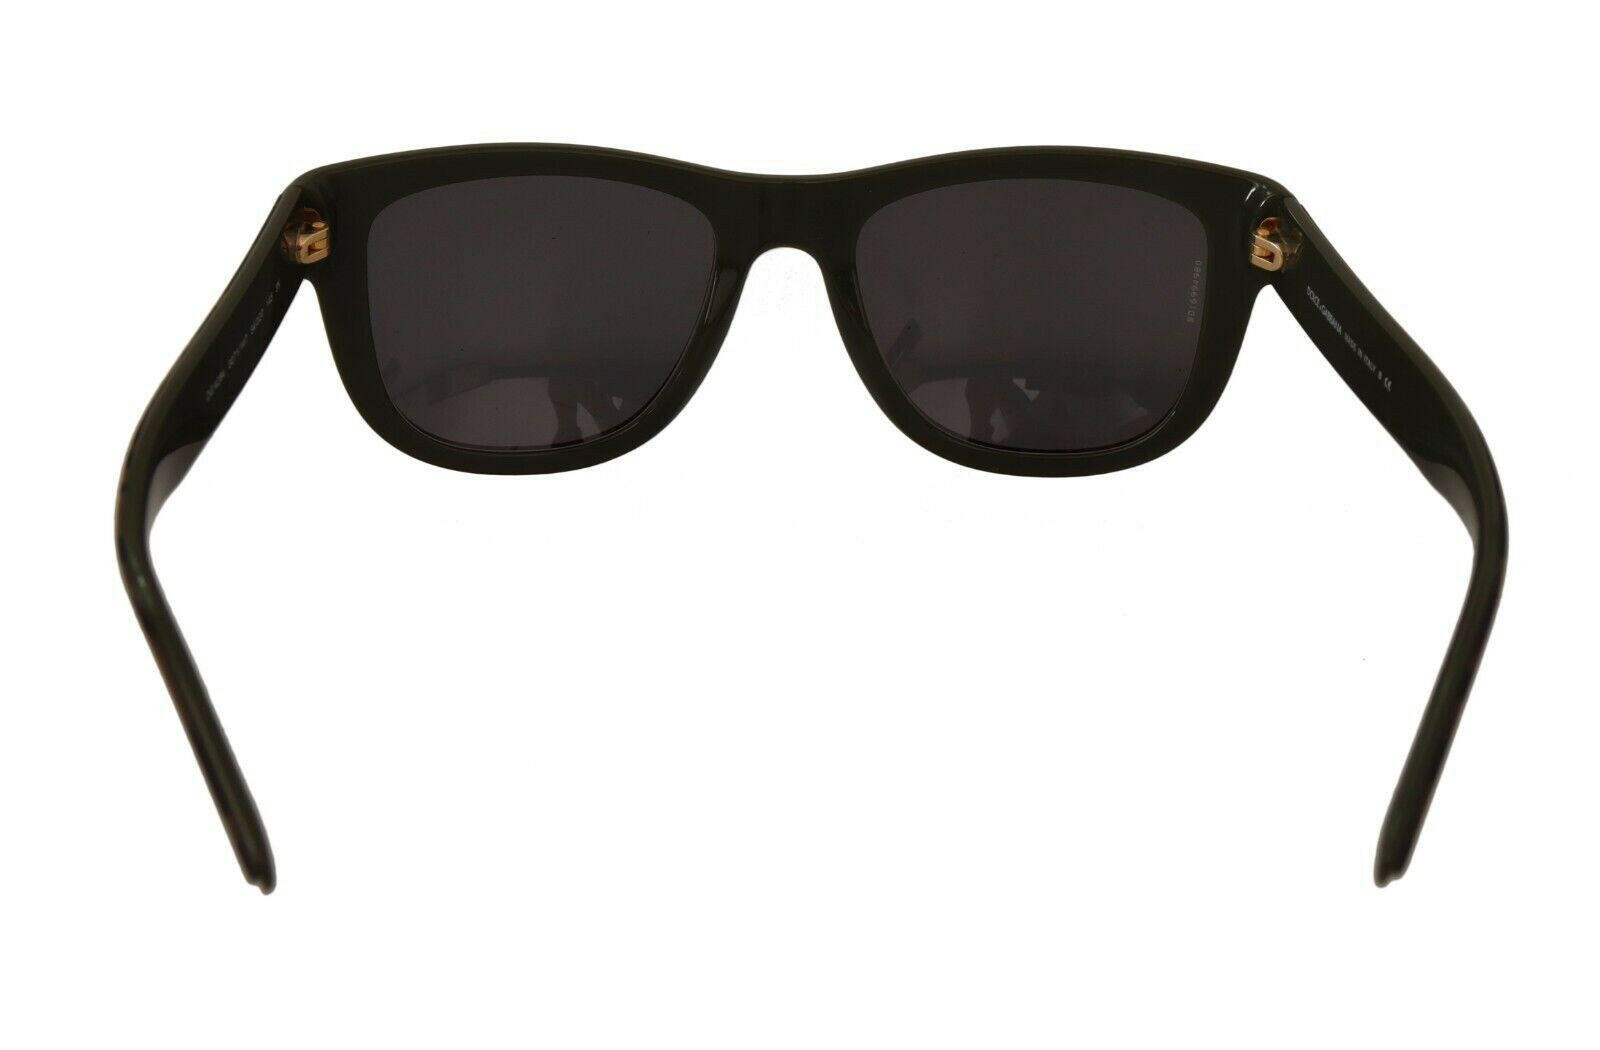 Dolce & Gabbana Brown Mirror Lens Plastic Full Rim Sunglasses - GENUINE AUTHENTIC BRAND LLC  